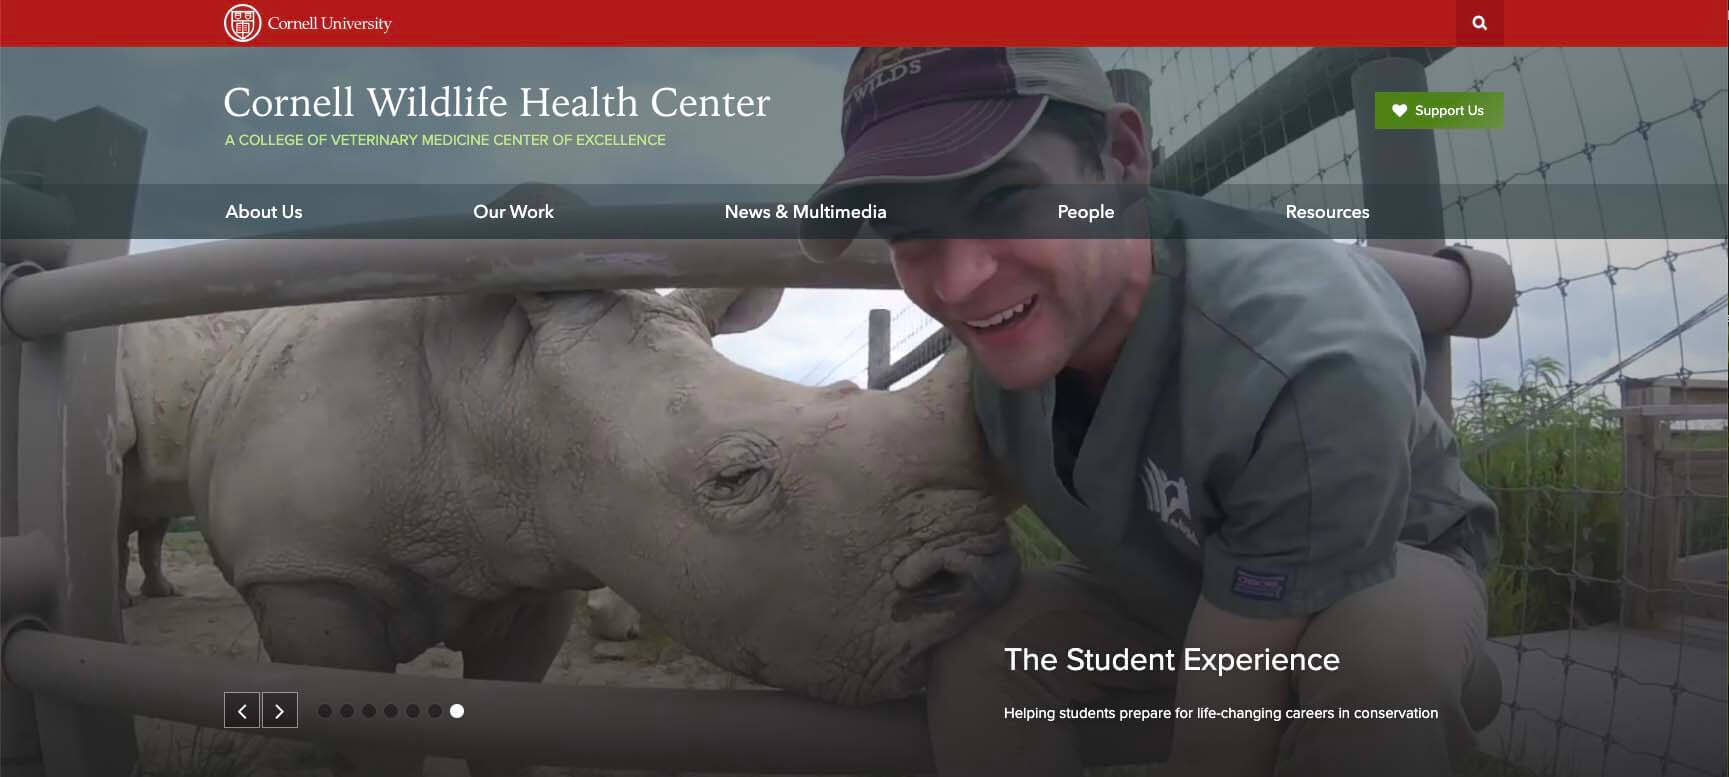 Cornell Wildlife Health Center homepage screenshot